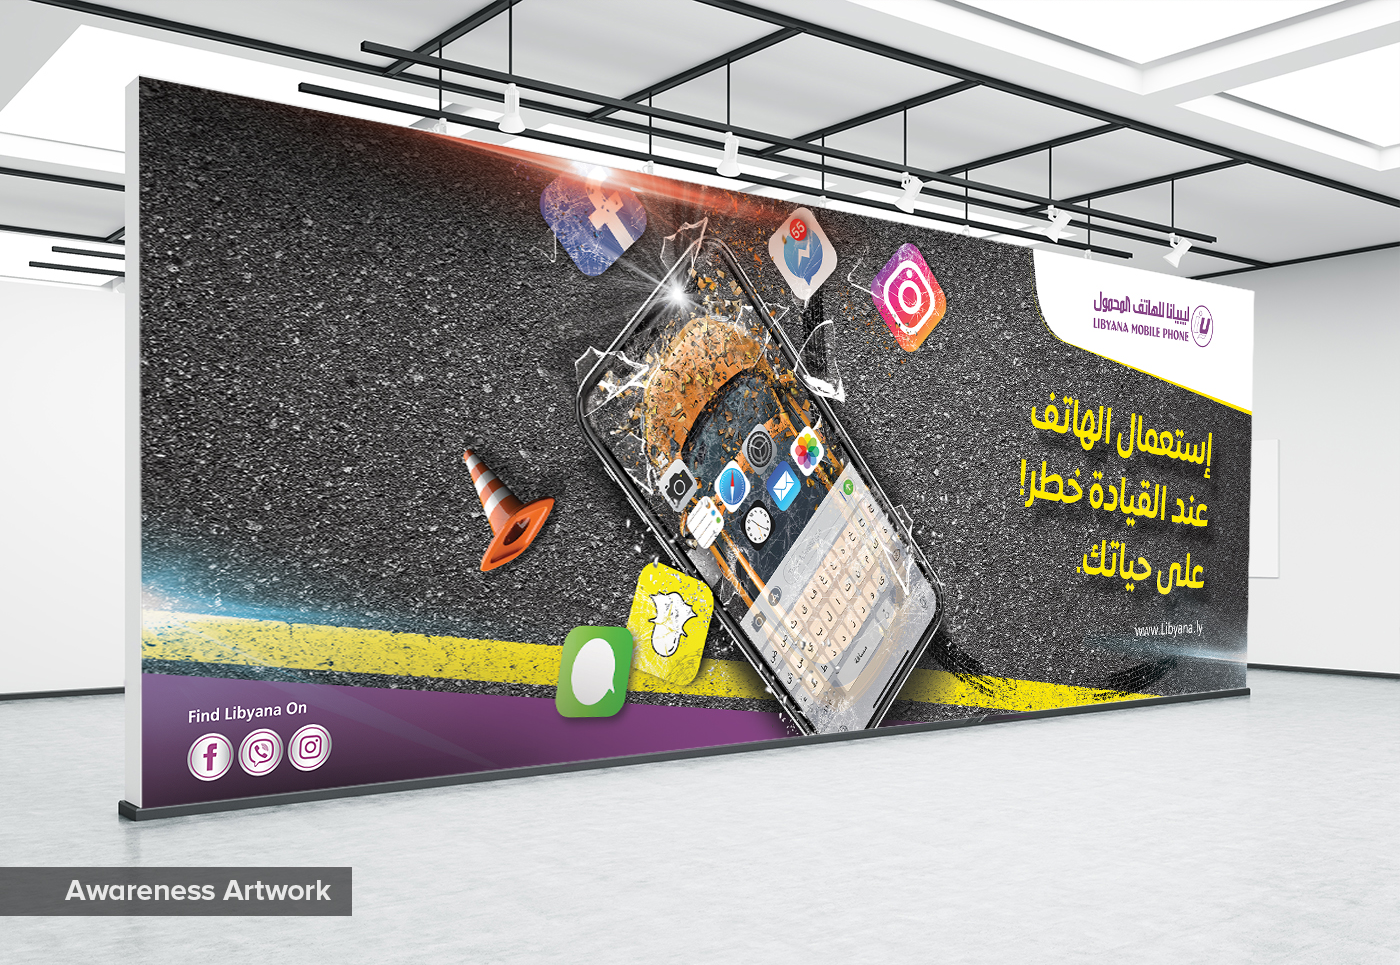 artwork communication Mobile services Internet libyana manipulating awareness mobile driving